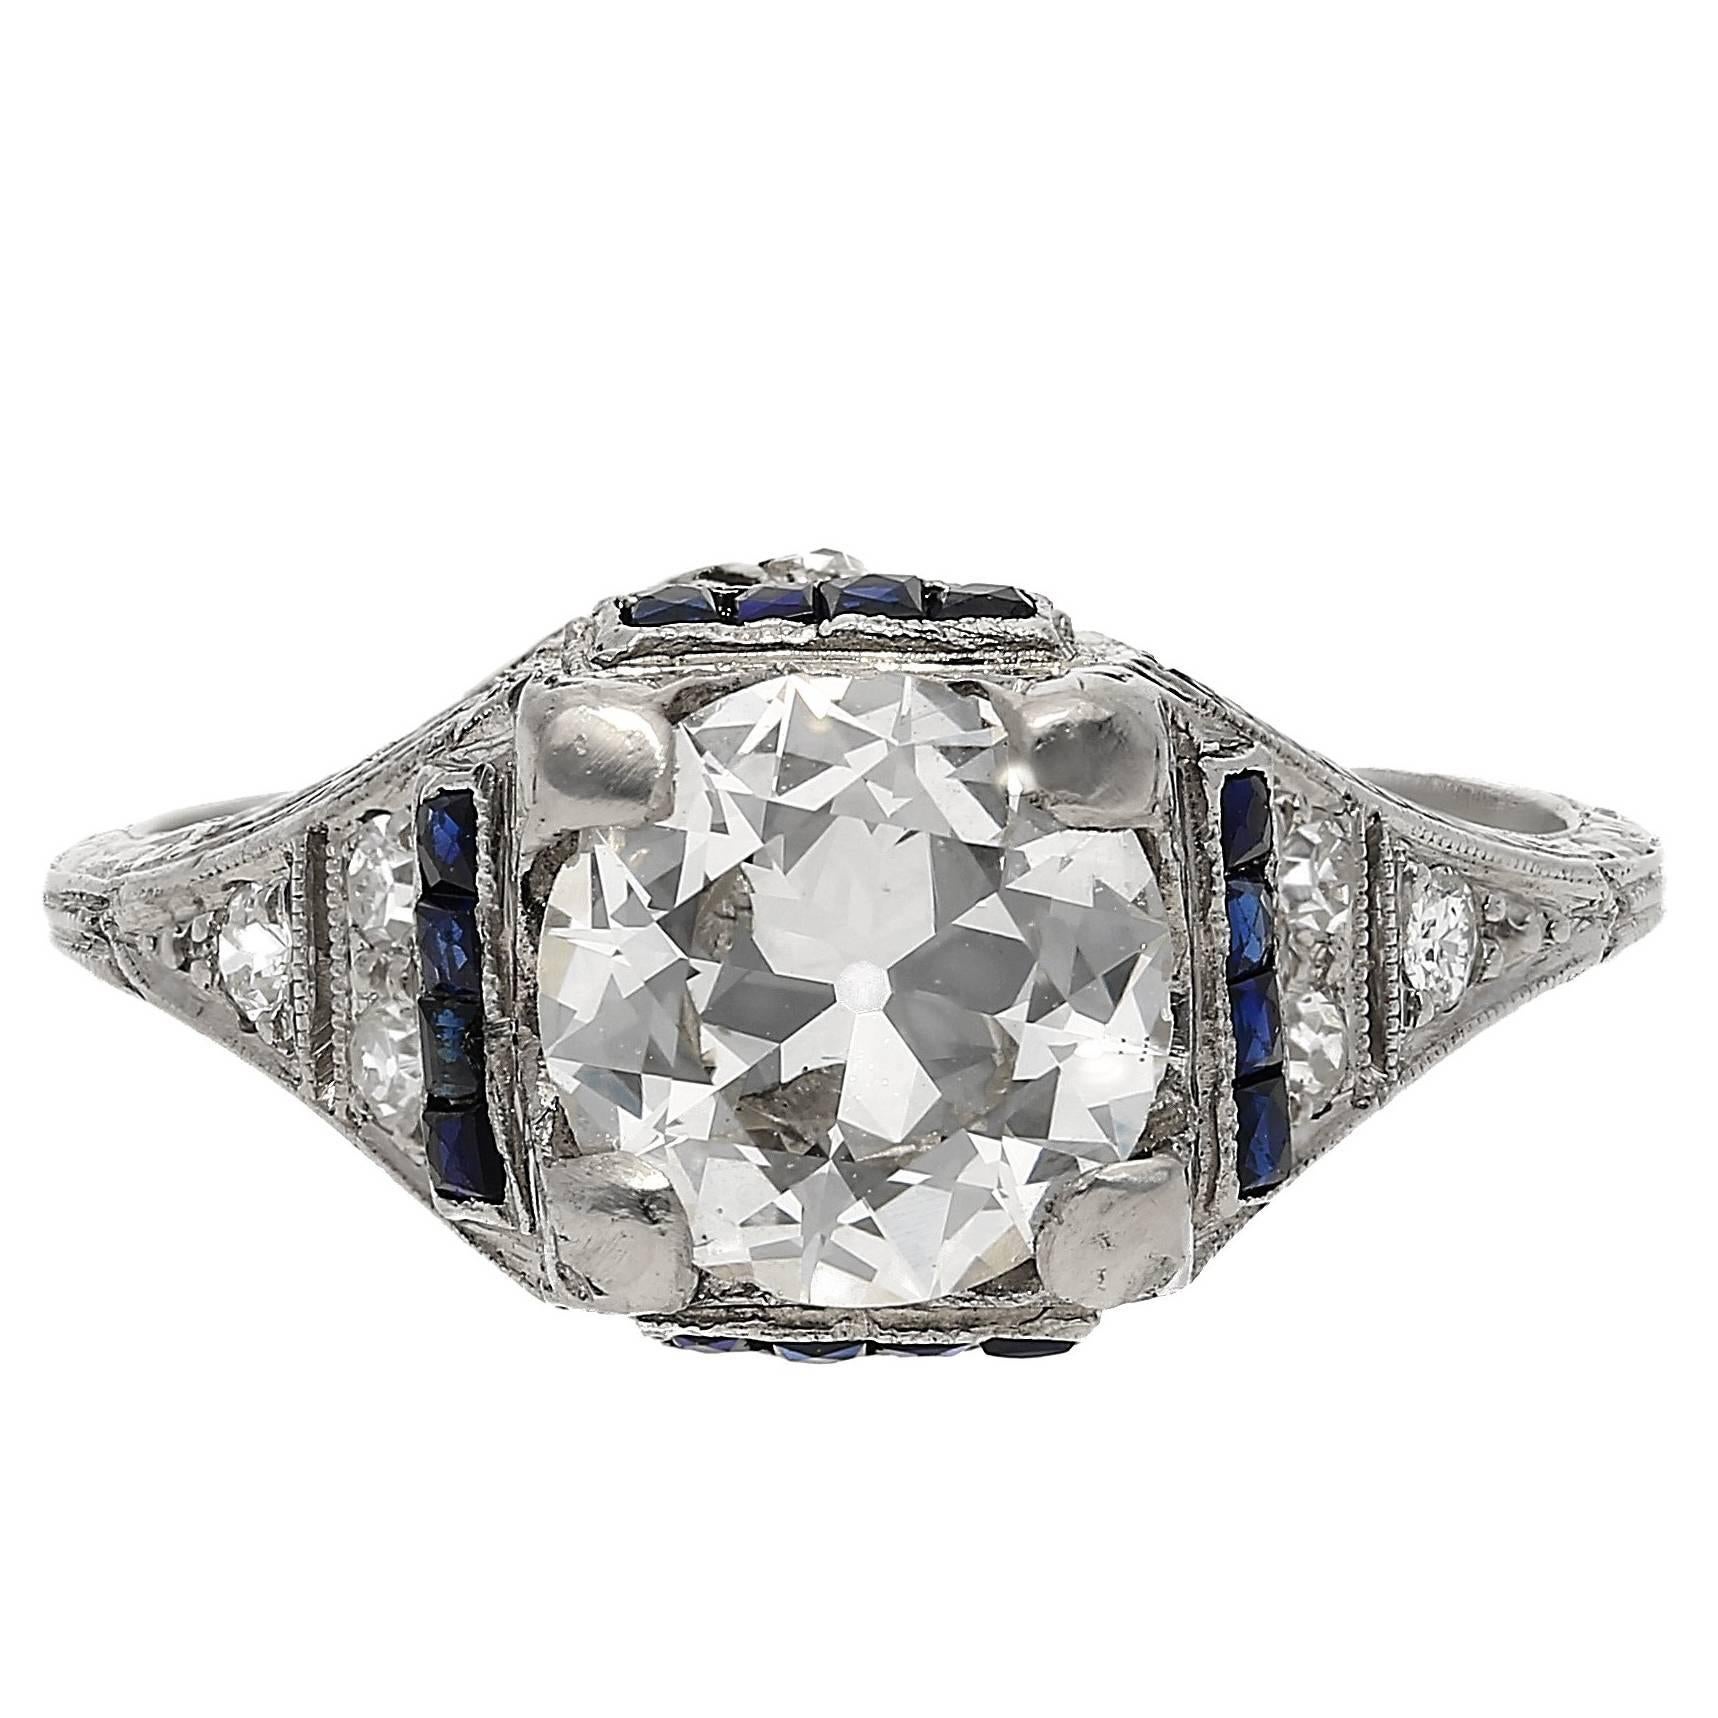 Old European Cut Art Deco Era 1.28 Carat Diamond and Sapphire Ring